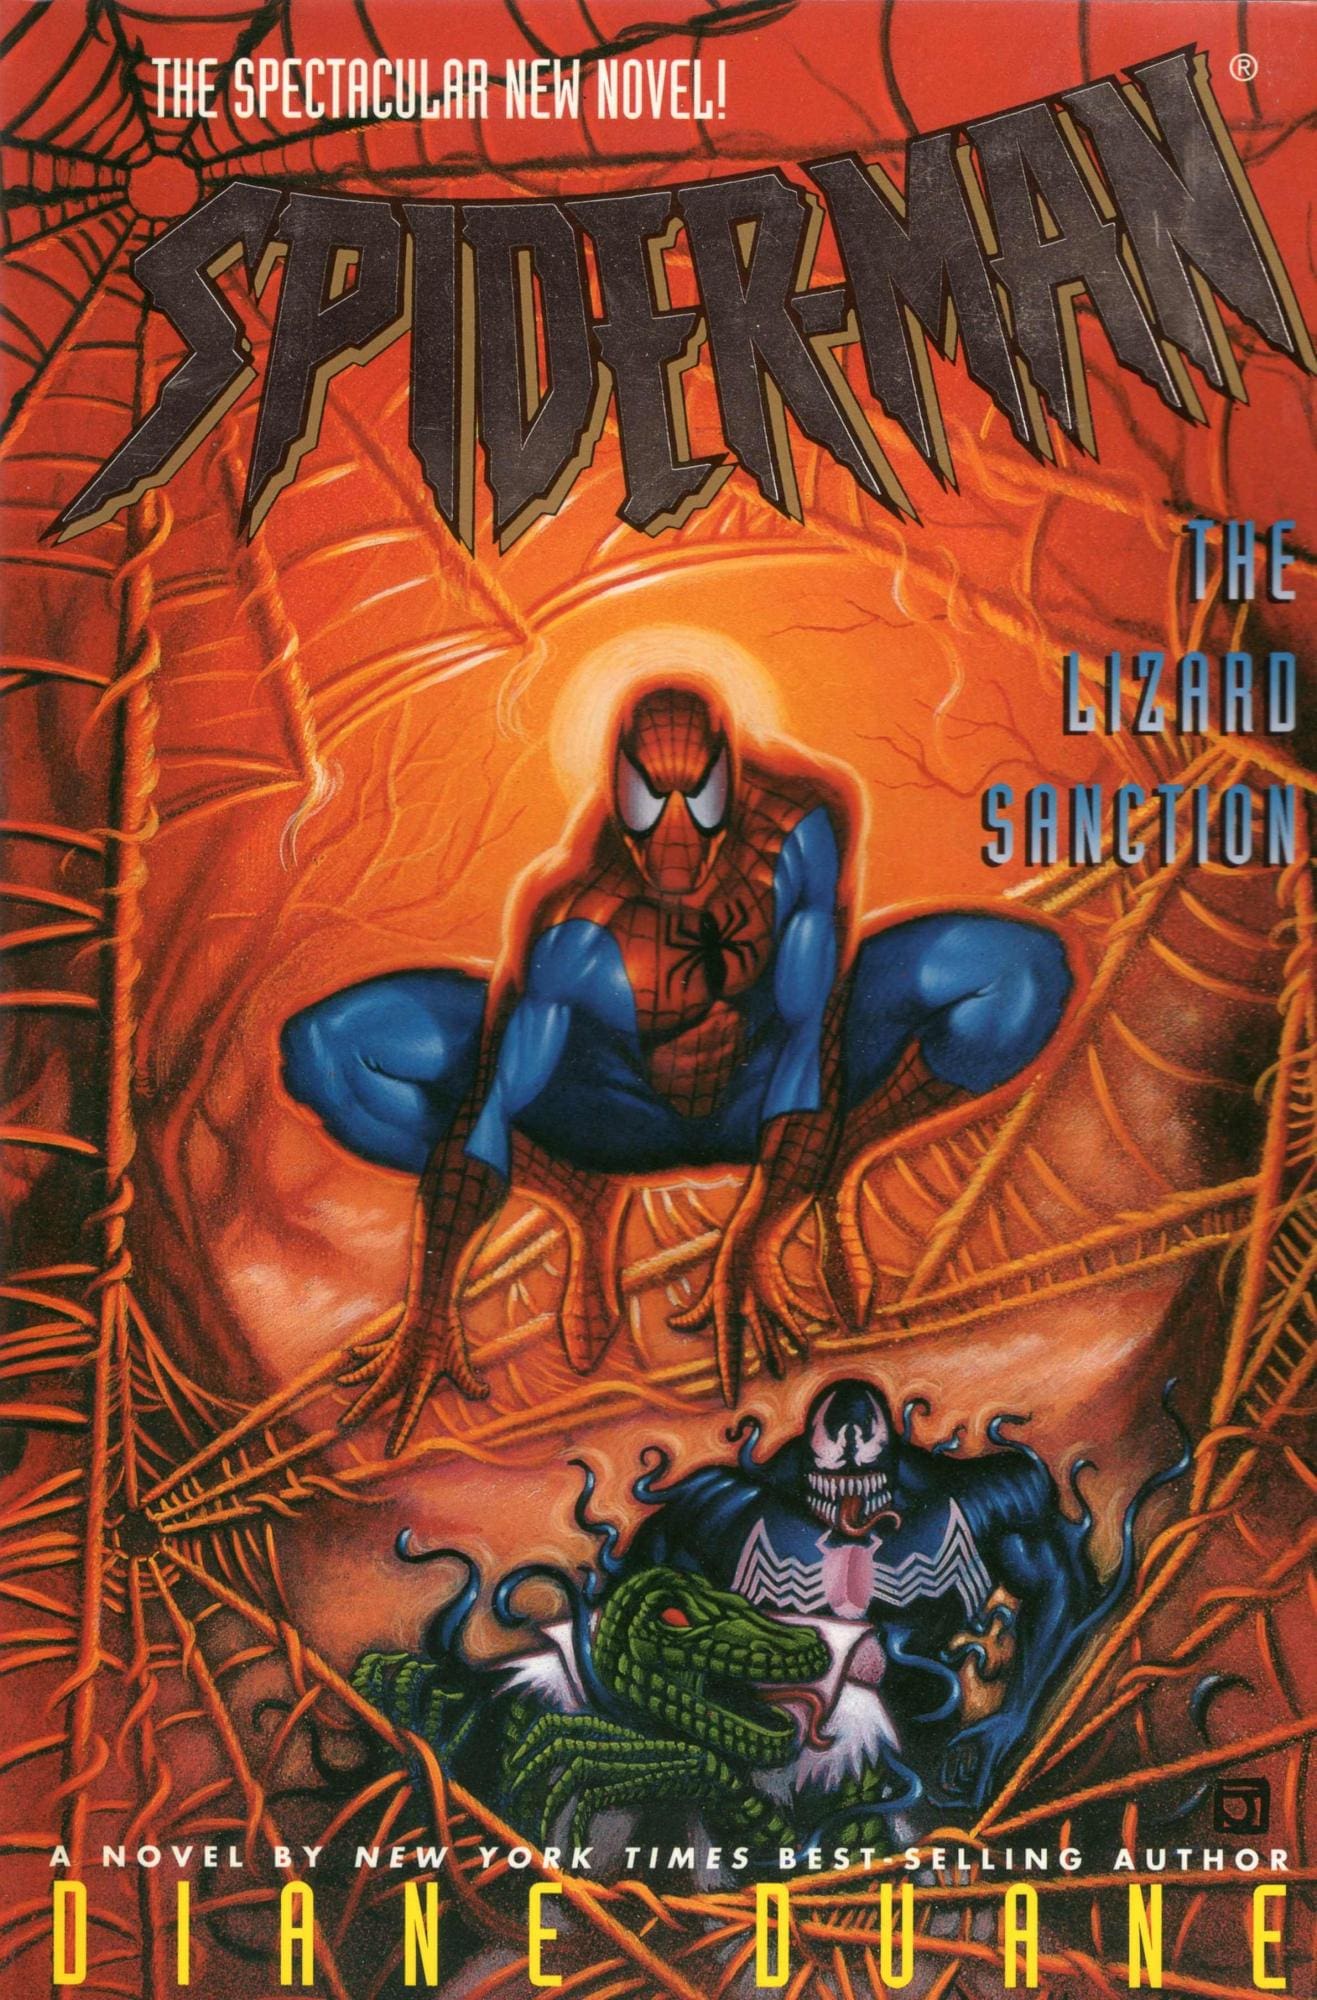 Spider-Man: The Lizard Sanction hardcover